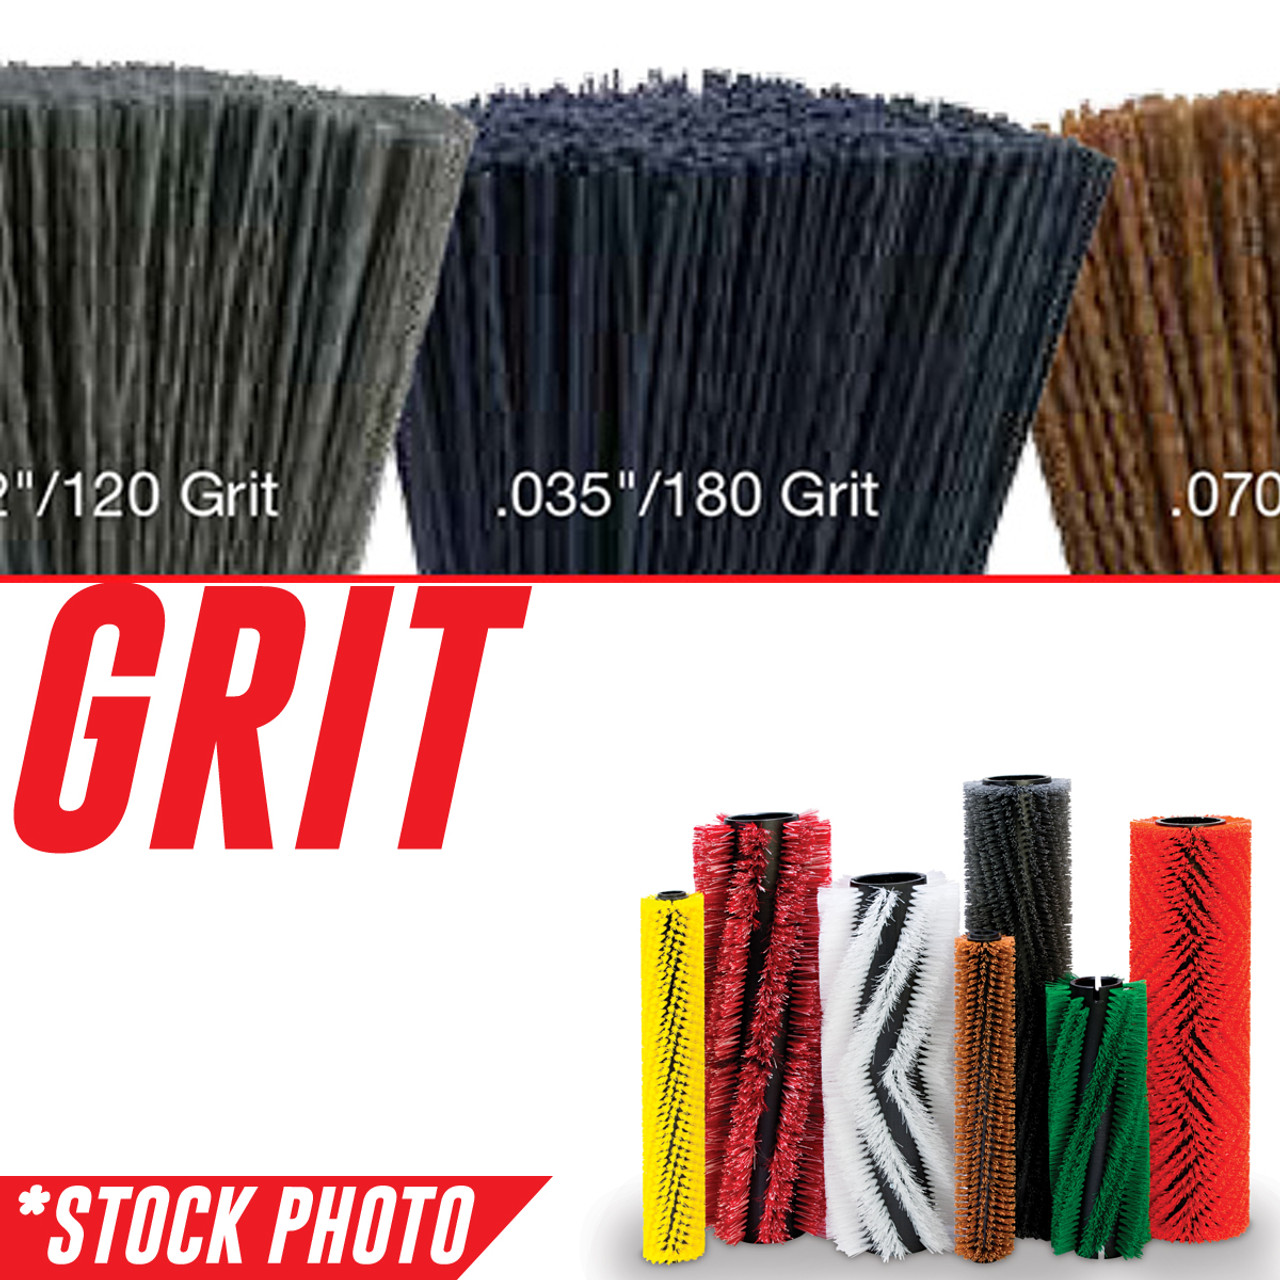 56409942: 42" Cylindrical Brush 16 Single Row .035"/180 Grit fits Advance-Nilfisk Models Retriever 2042